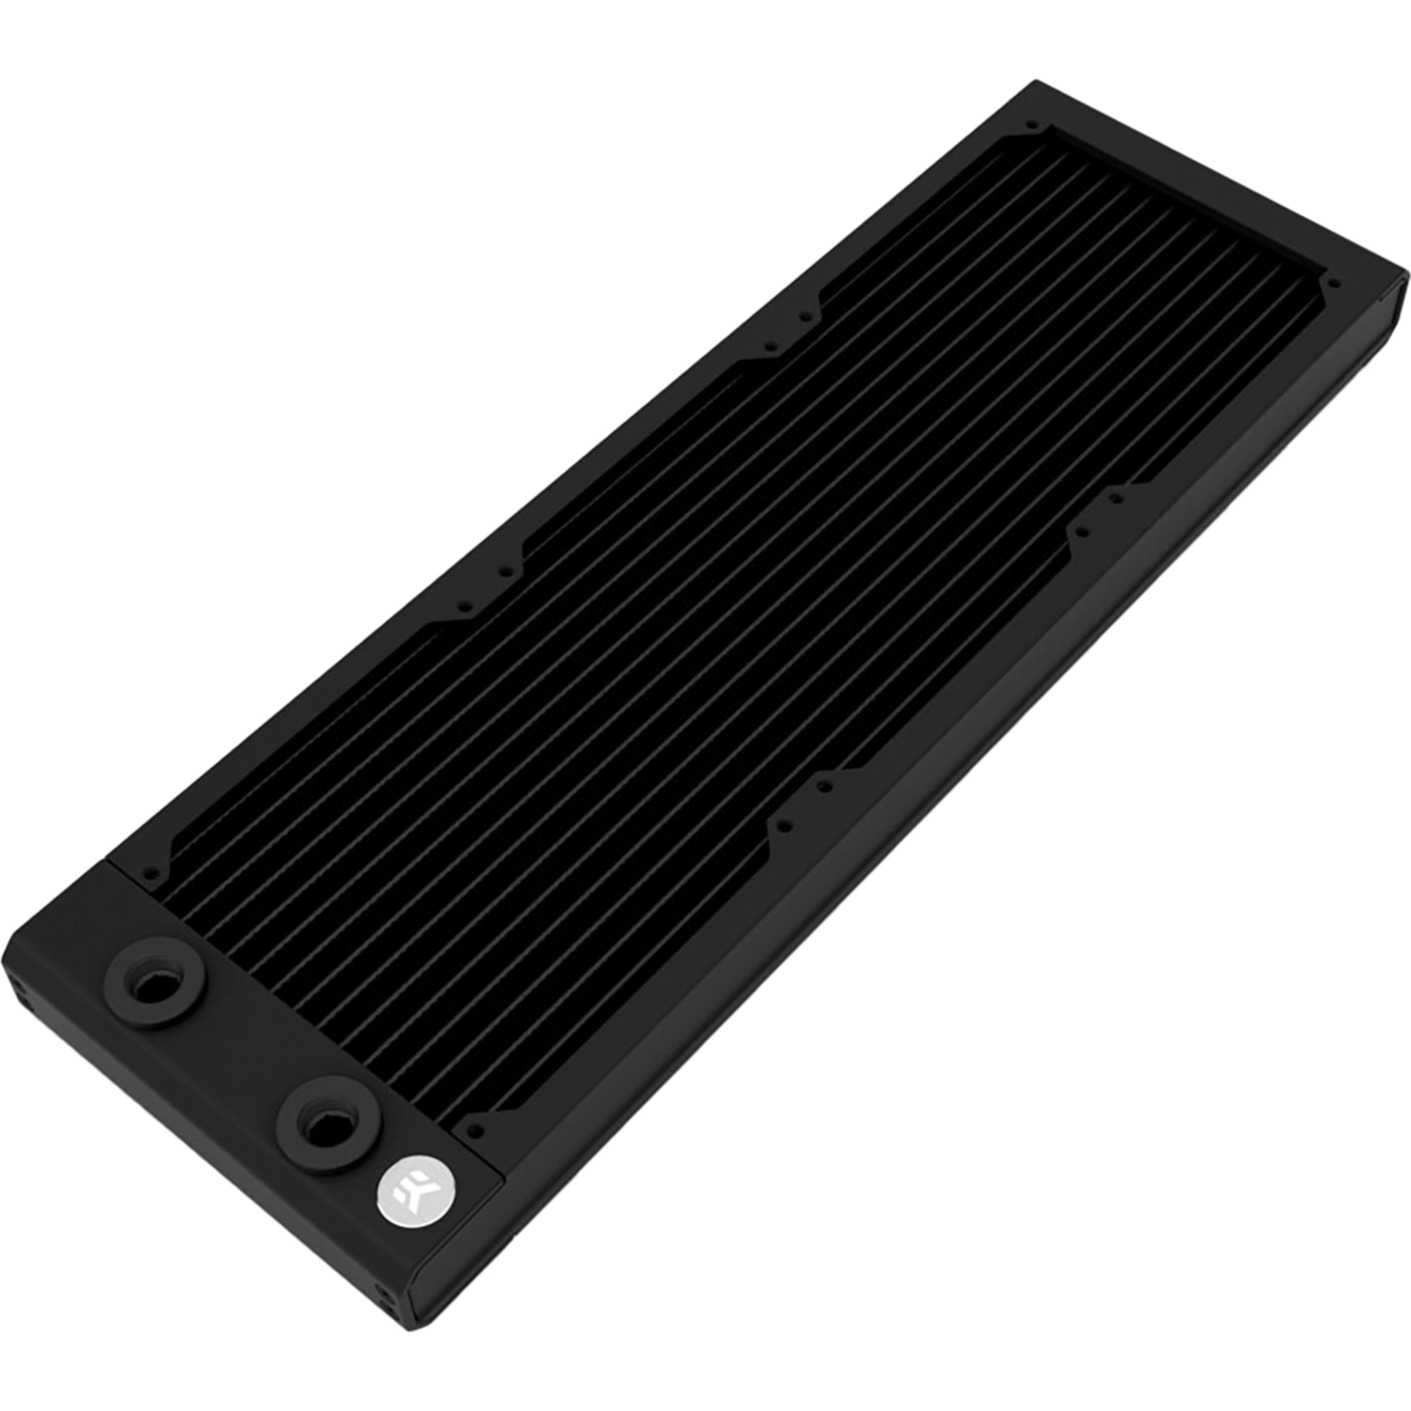 EK-Quantum Surface S360 - Black Edition, Radiator von EKWB